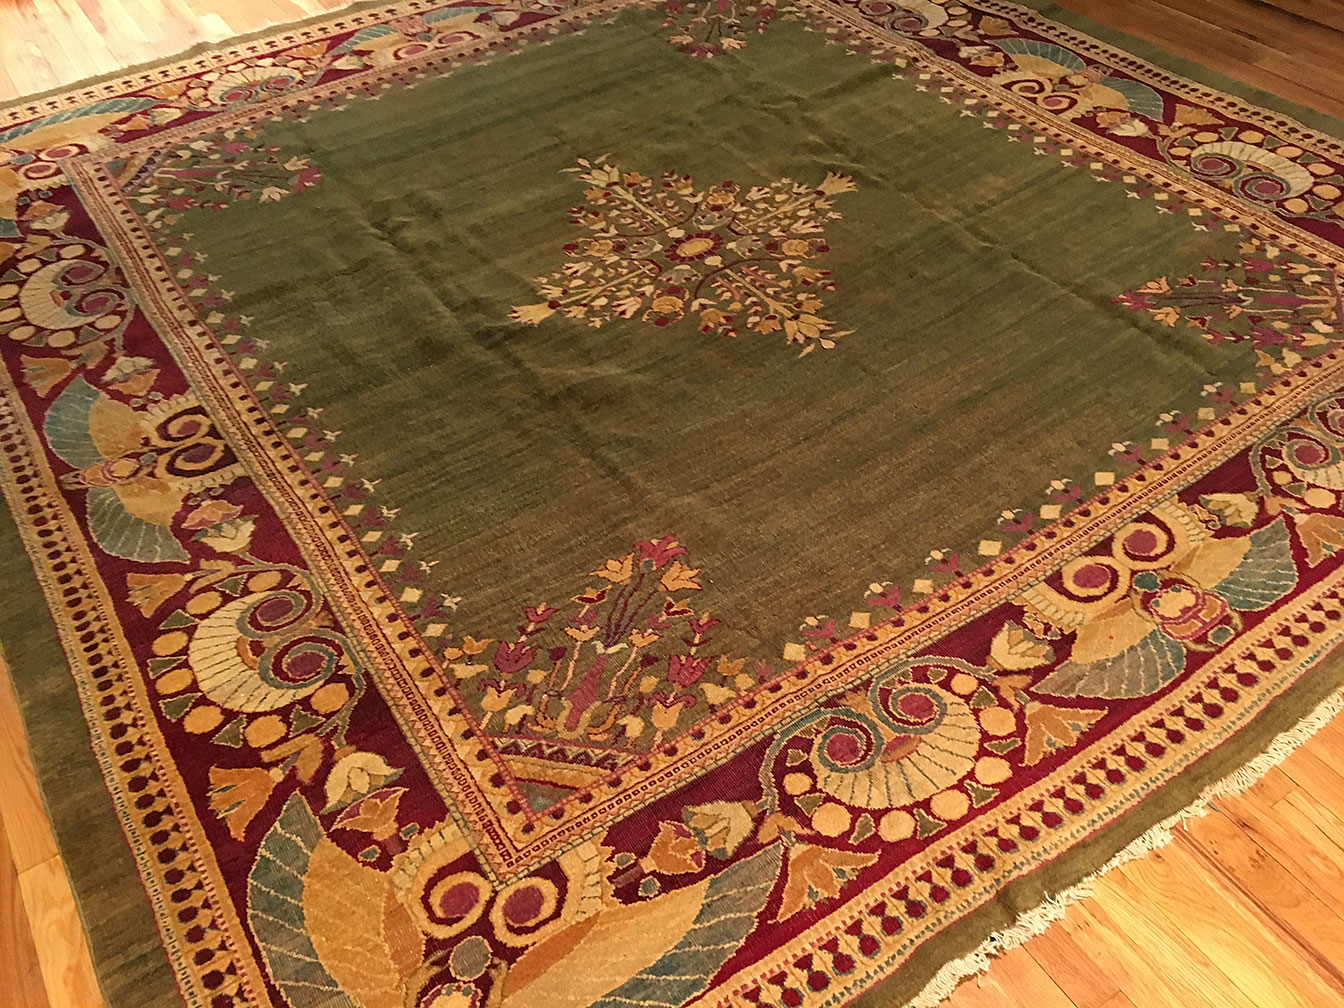 Antique amritsar Carpet - # 52672